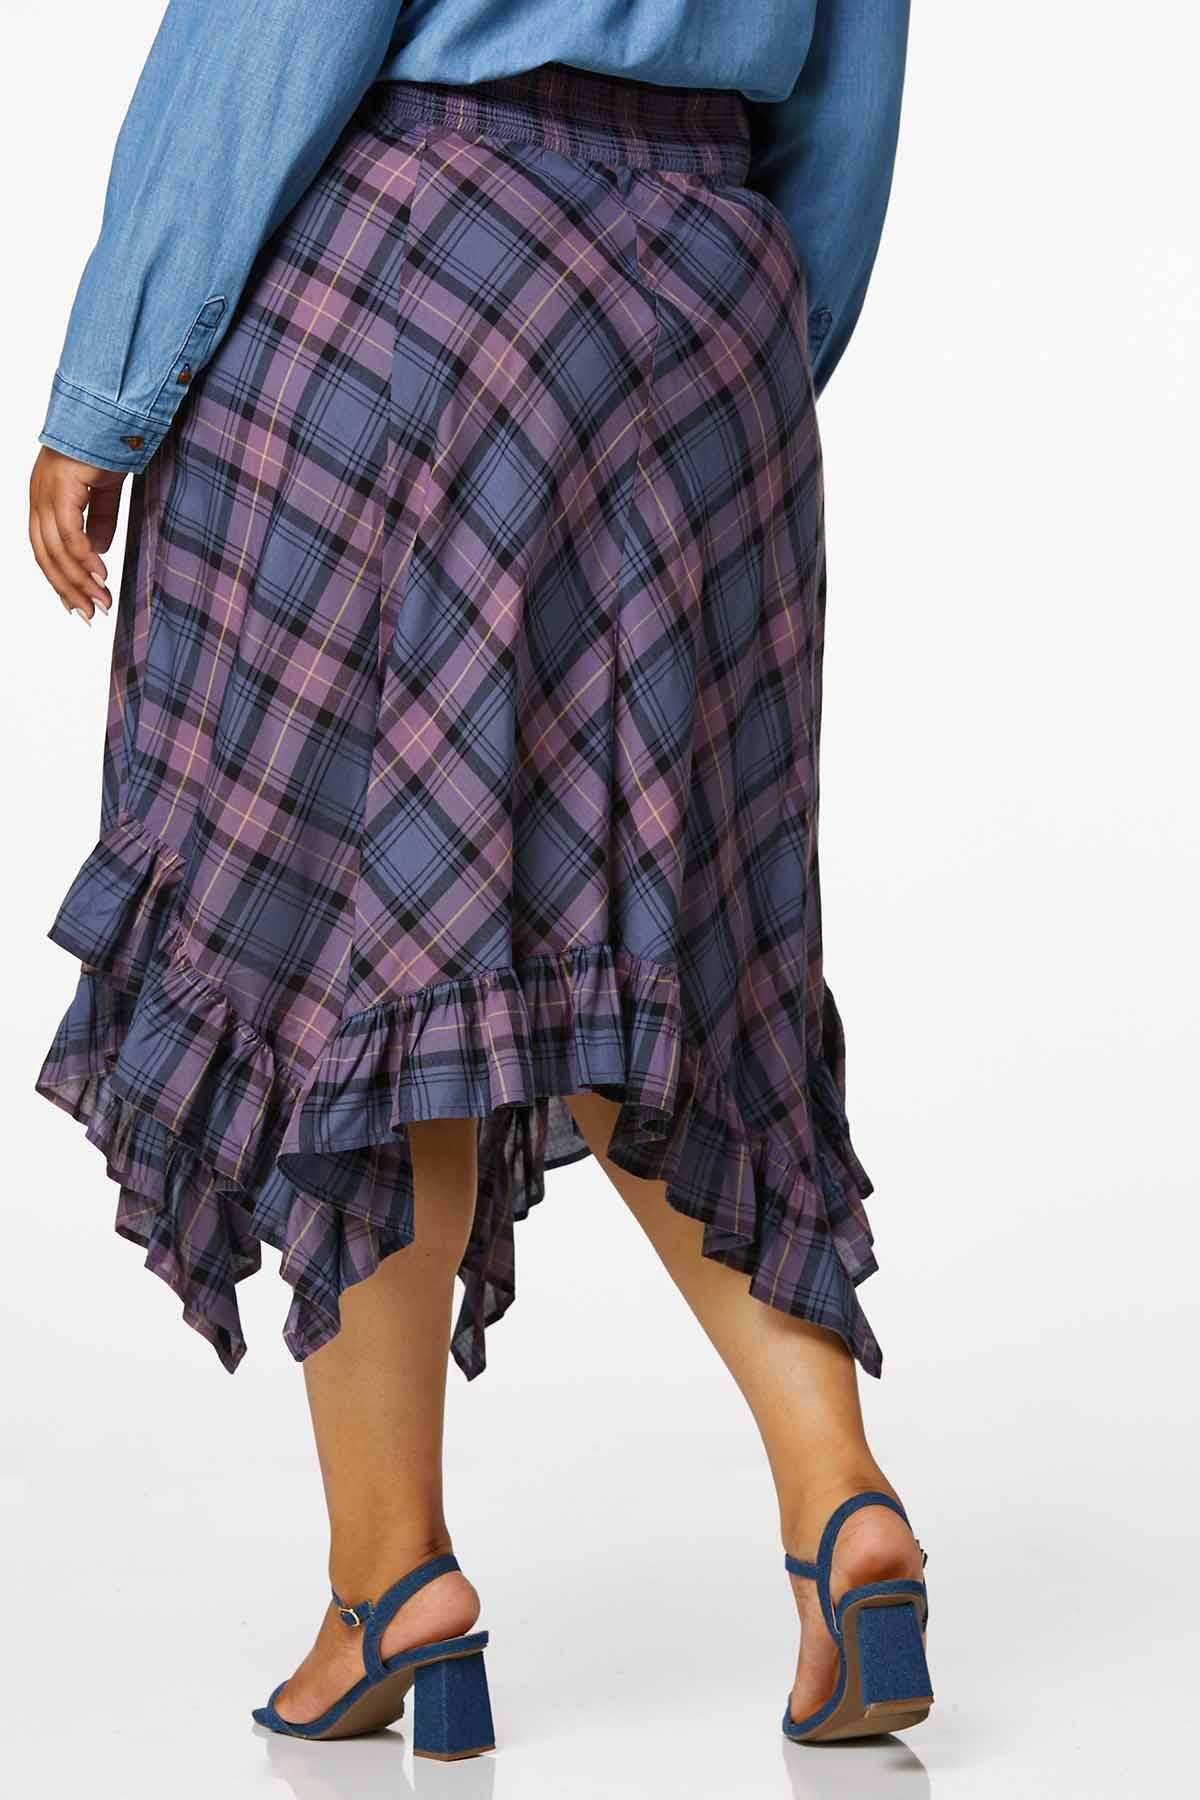 Plus Size Skirts | Cato Fashions